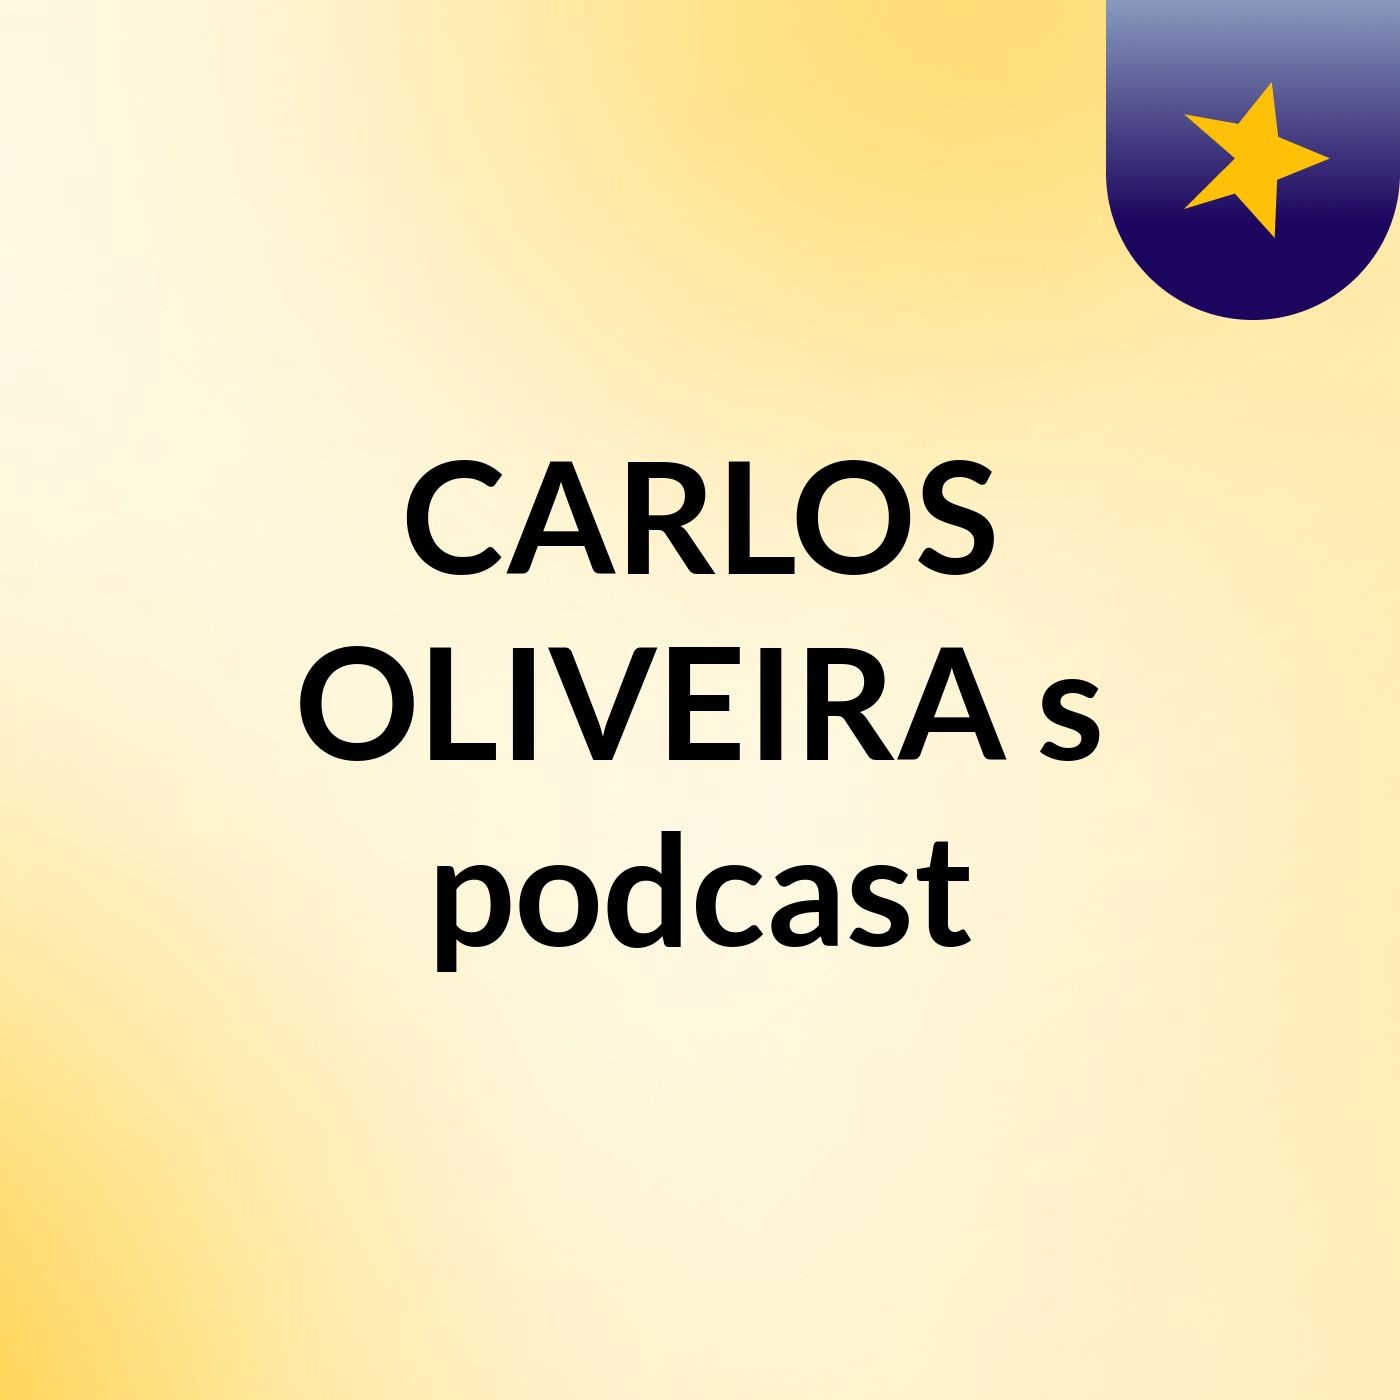 CARLOS OLIVEIRA's podcast